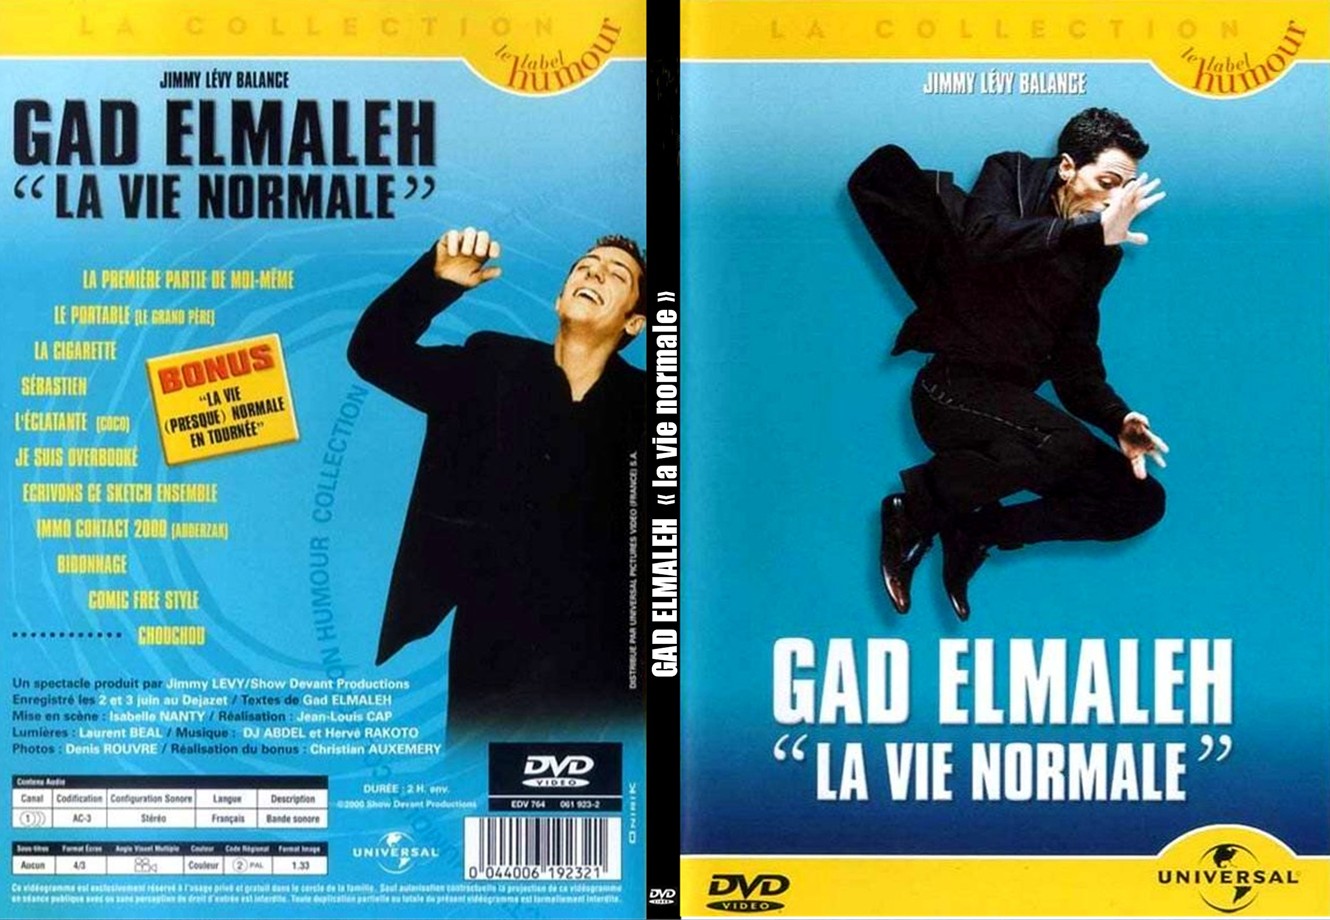 Jaquette DVD Gad elmaleh La vie normale - SLIM